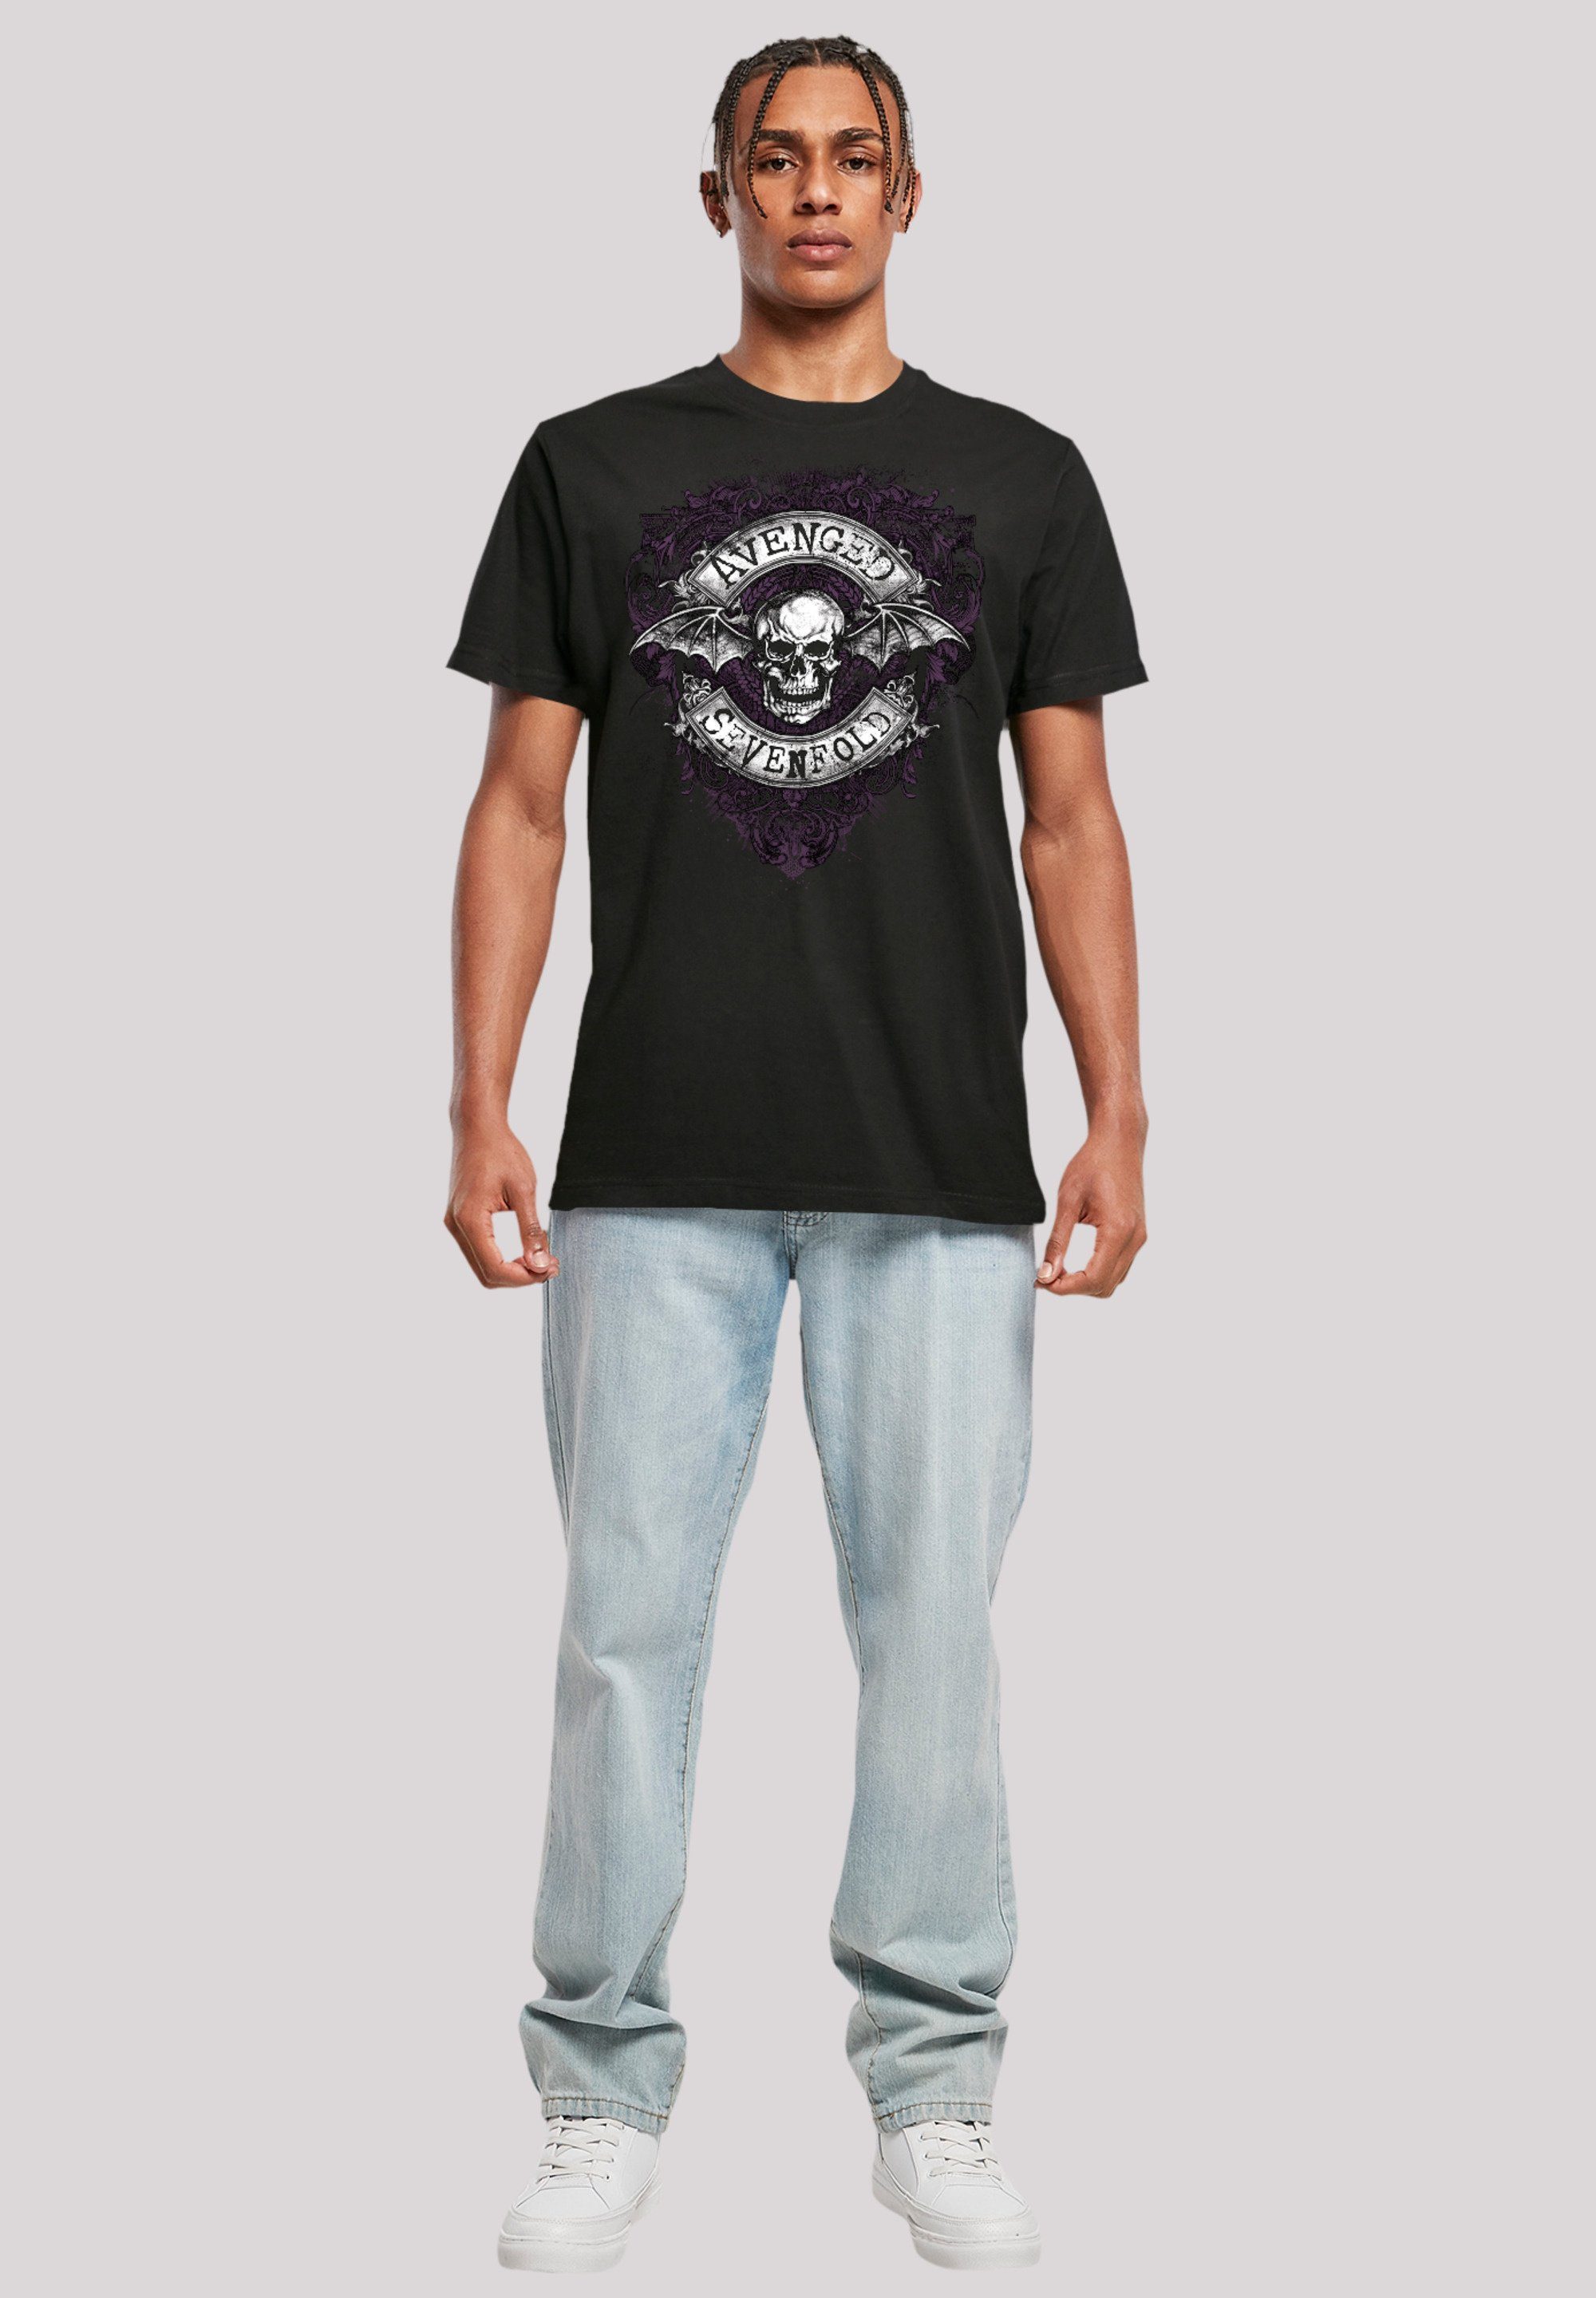 Qualität, Rock-Musik Band T-Shirt Sevenfold Avenged Metal Bat Band, F4NT4STIC Premium Rock Flourish